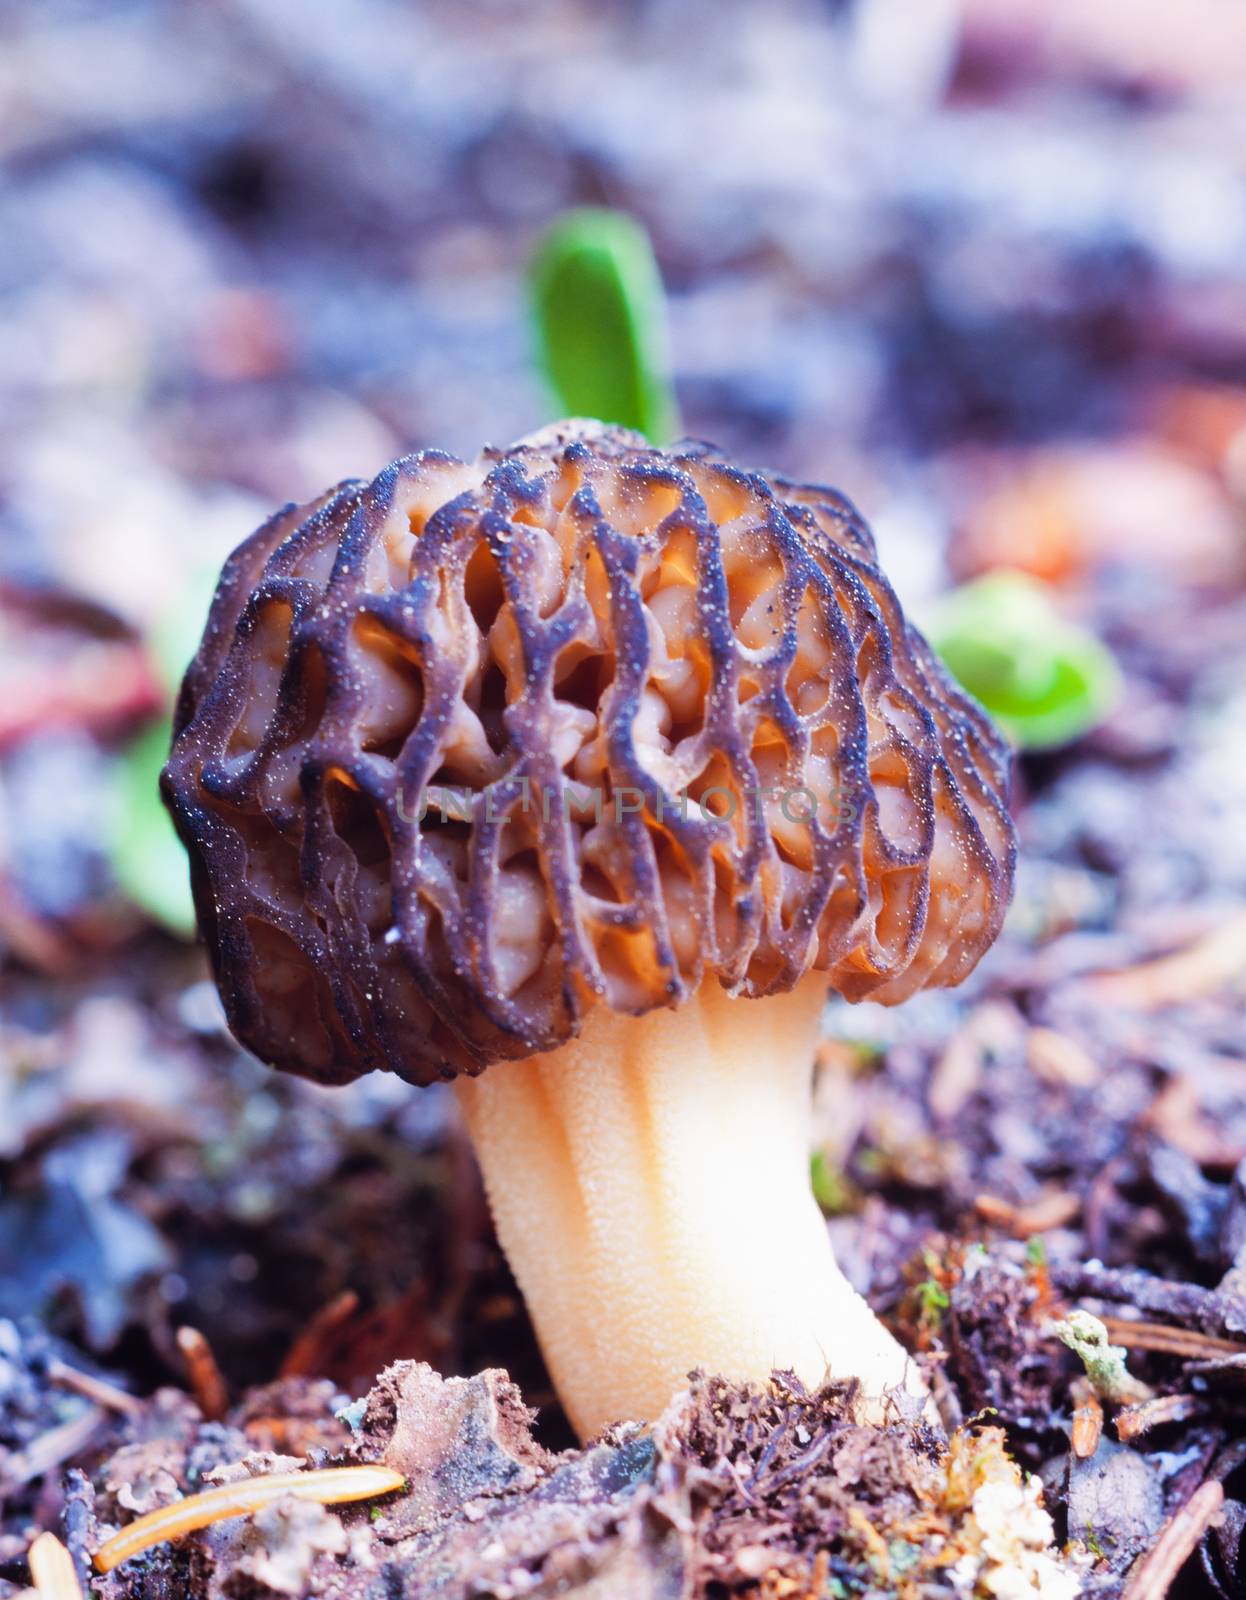 Black Morel, Morchella elata, mushroom fungus young fruit body on forest floor